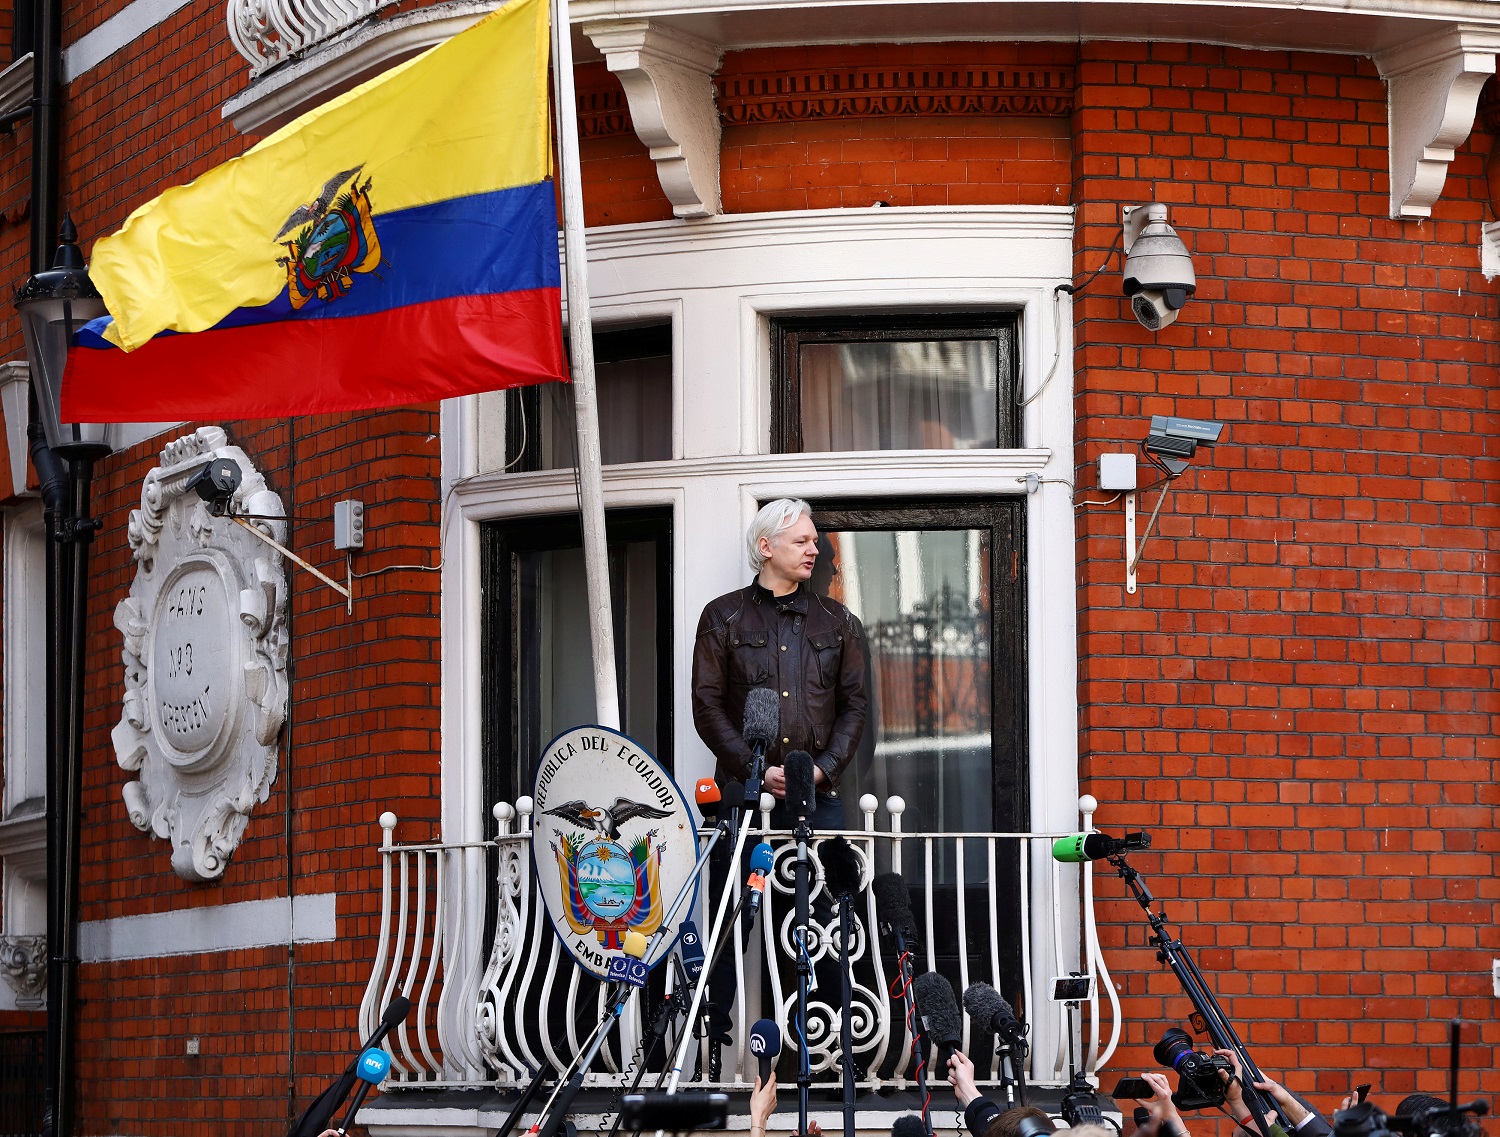 Ecuador intentó darle un puesto diplomático a Assange en Rusia